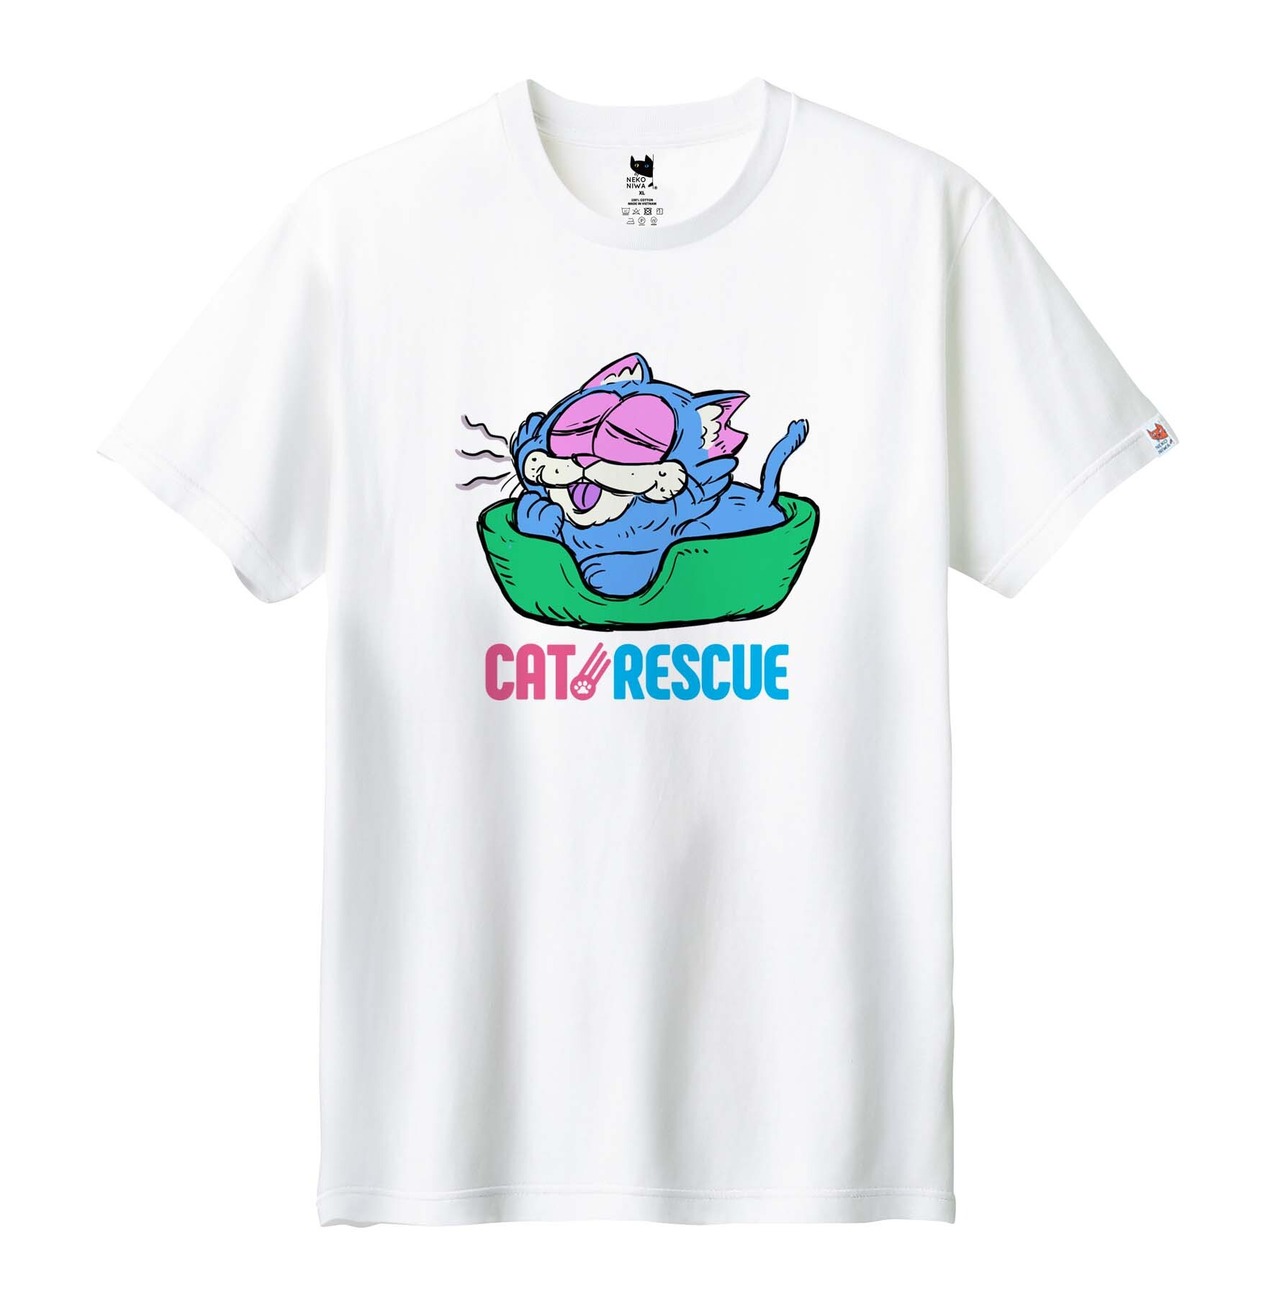 【CatRescue】Sleepy Cat T-shirt　★全国送料無料!!★